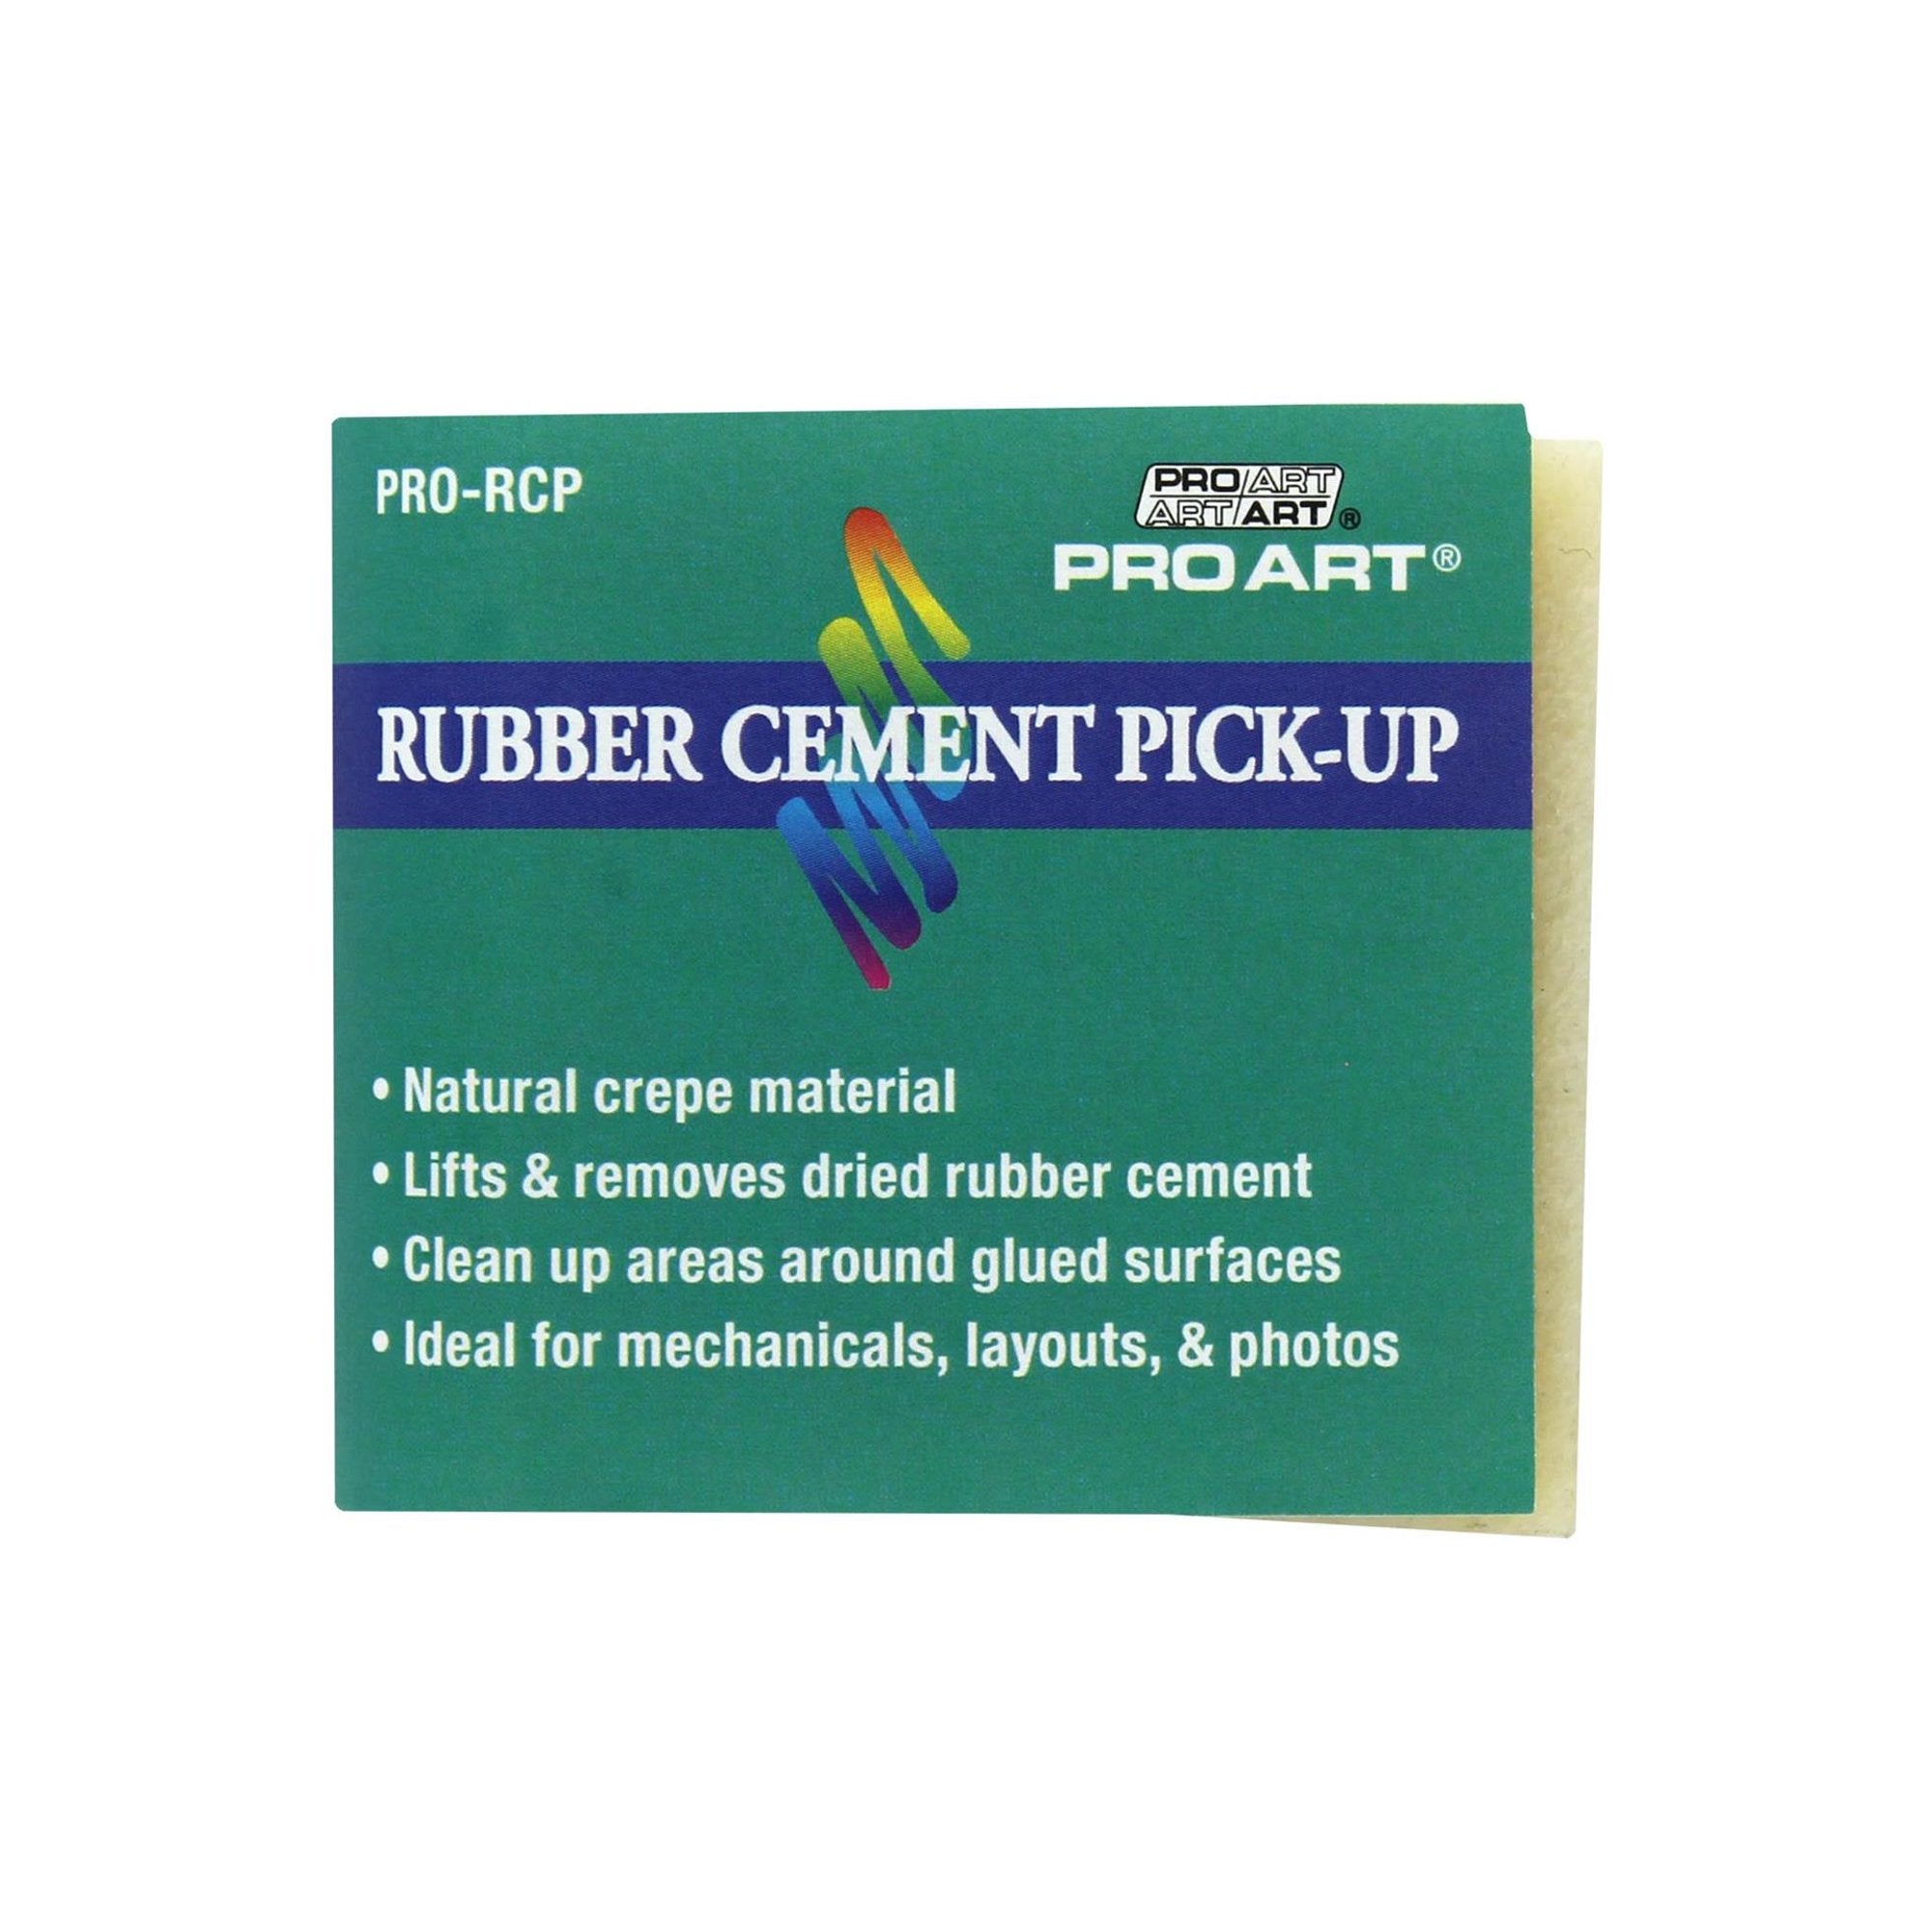 shopaztecs - Rubber Cement Pik-Up Eraser